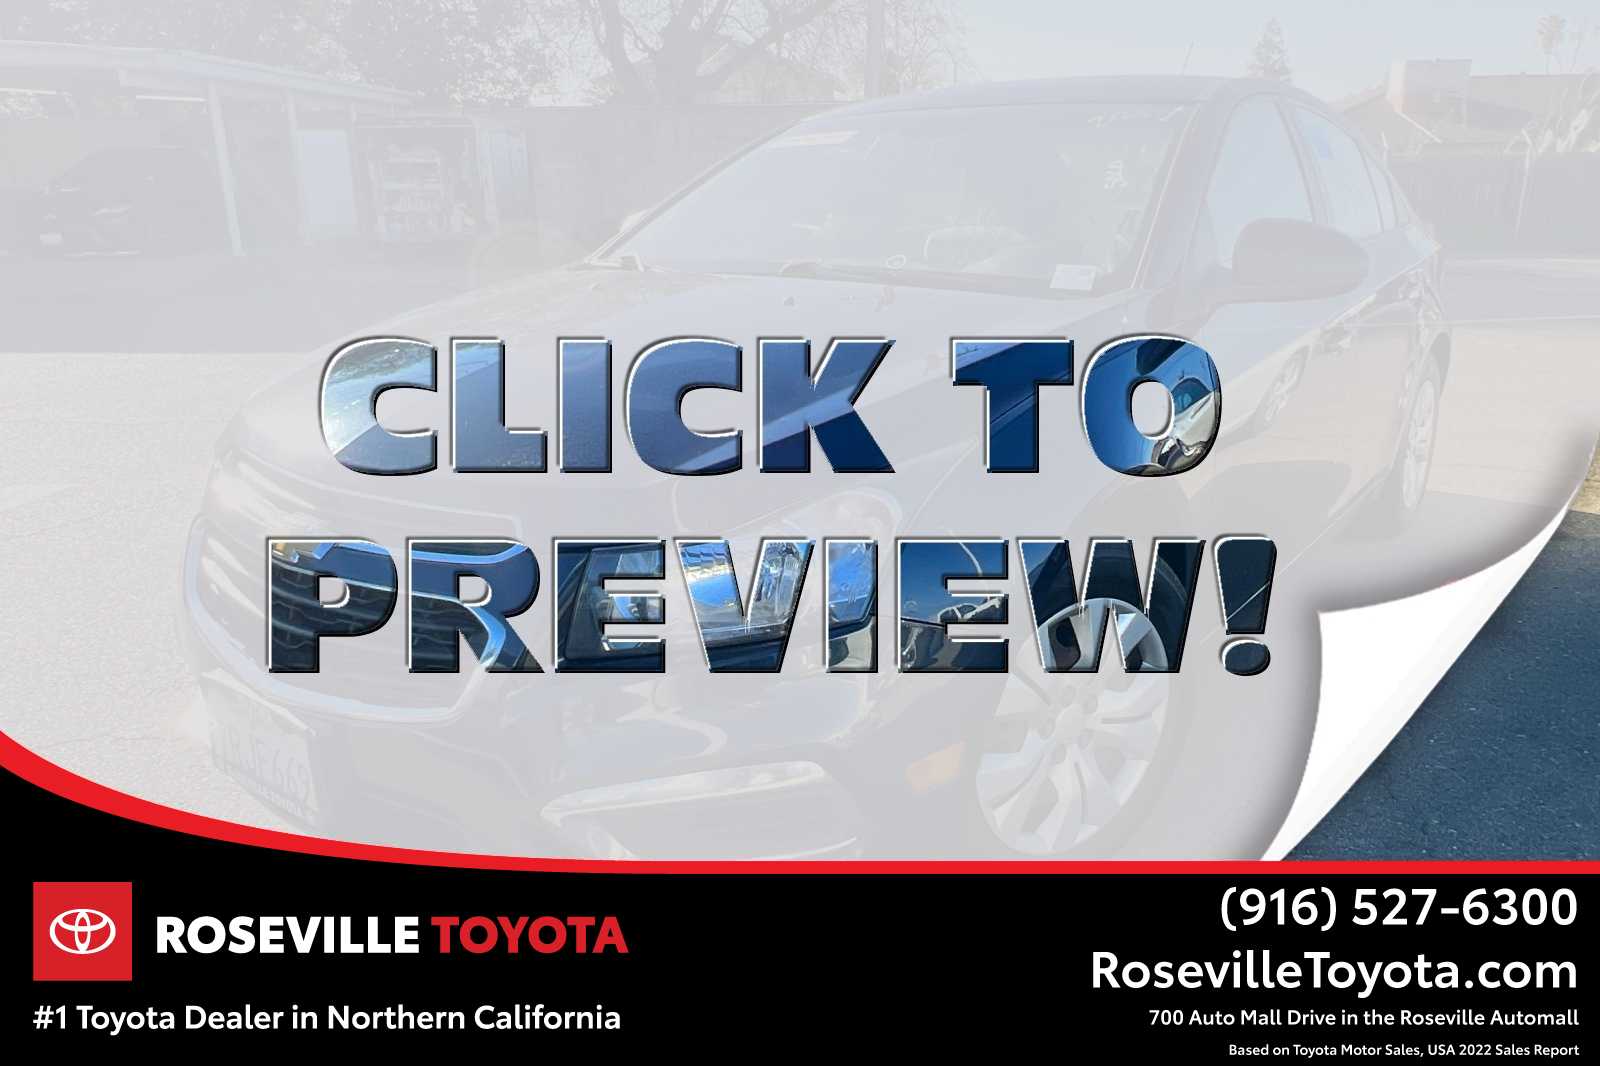 2015 Chevrolet Cruze L -
                Roseville, CA